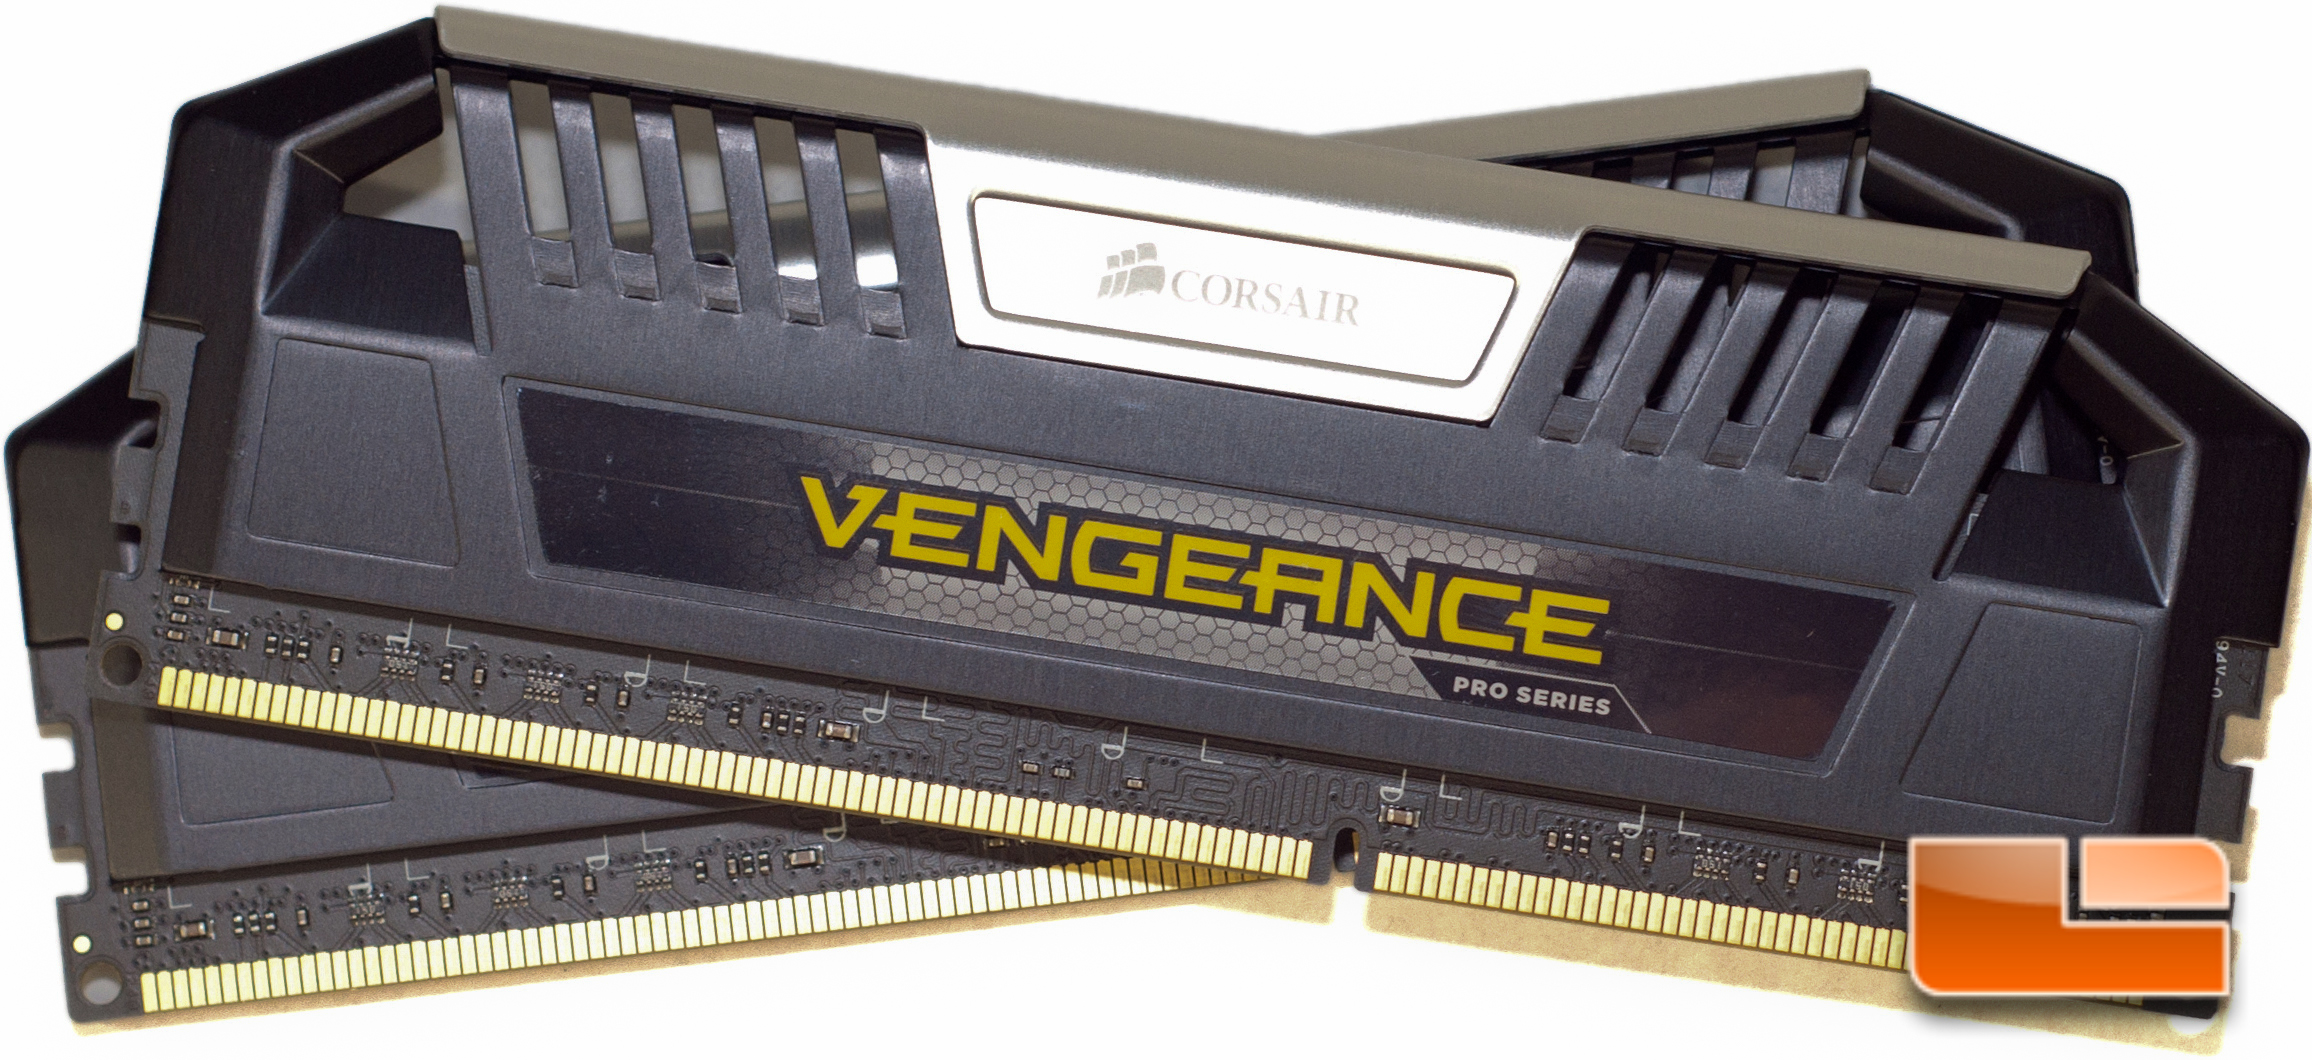 Corsair Vengeance Pro Series 16GB DDR3 1866MHz Memory Kit Review 